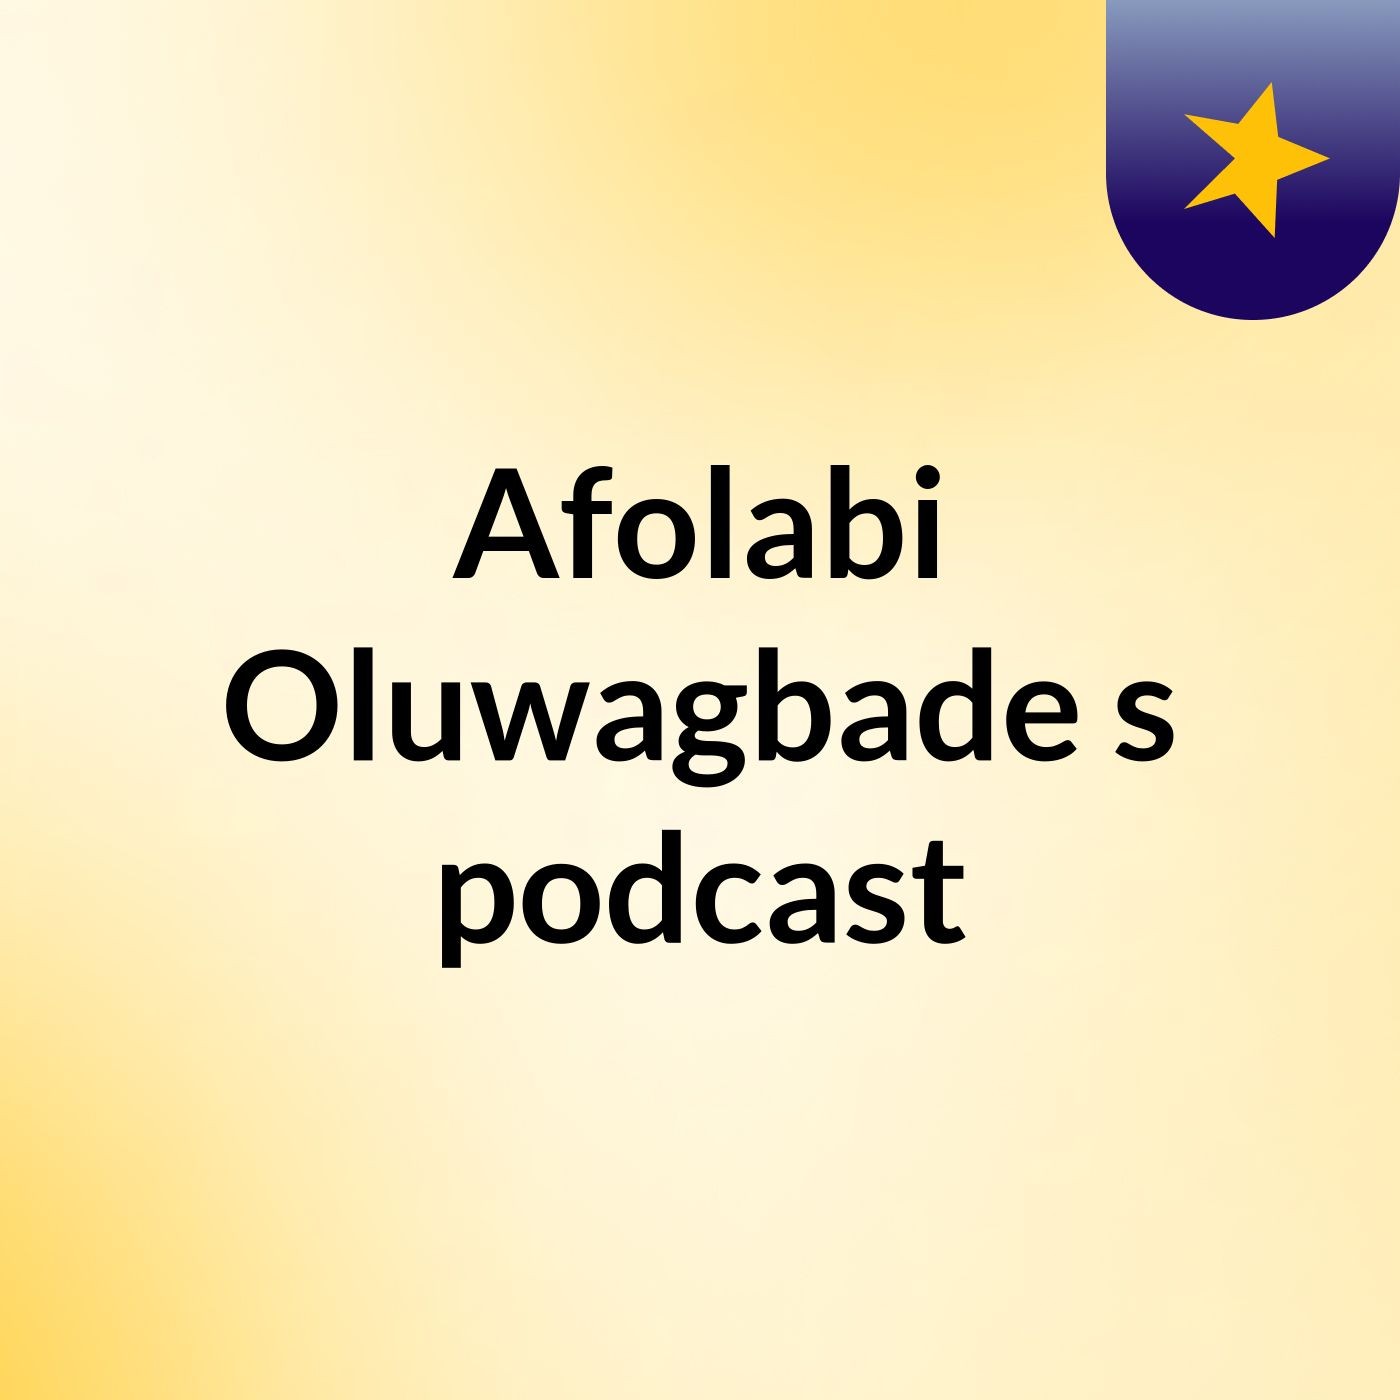 Afolabi Oluwagbade's podcast